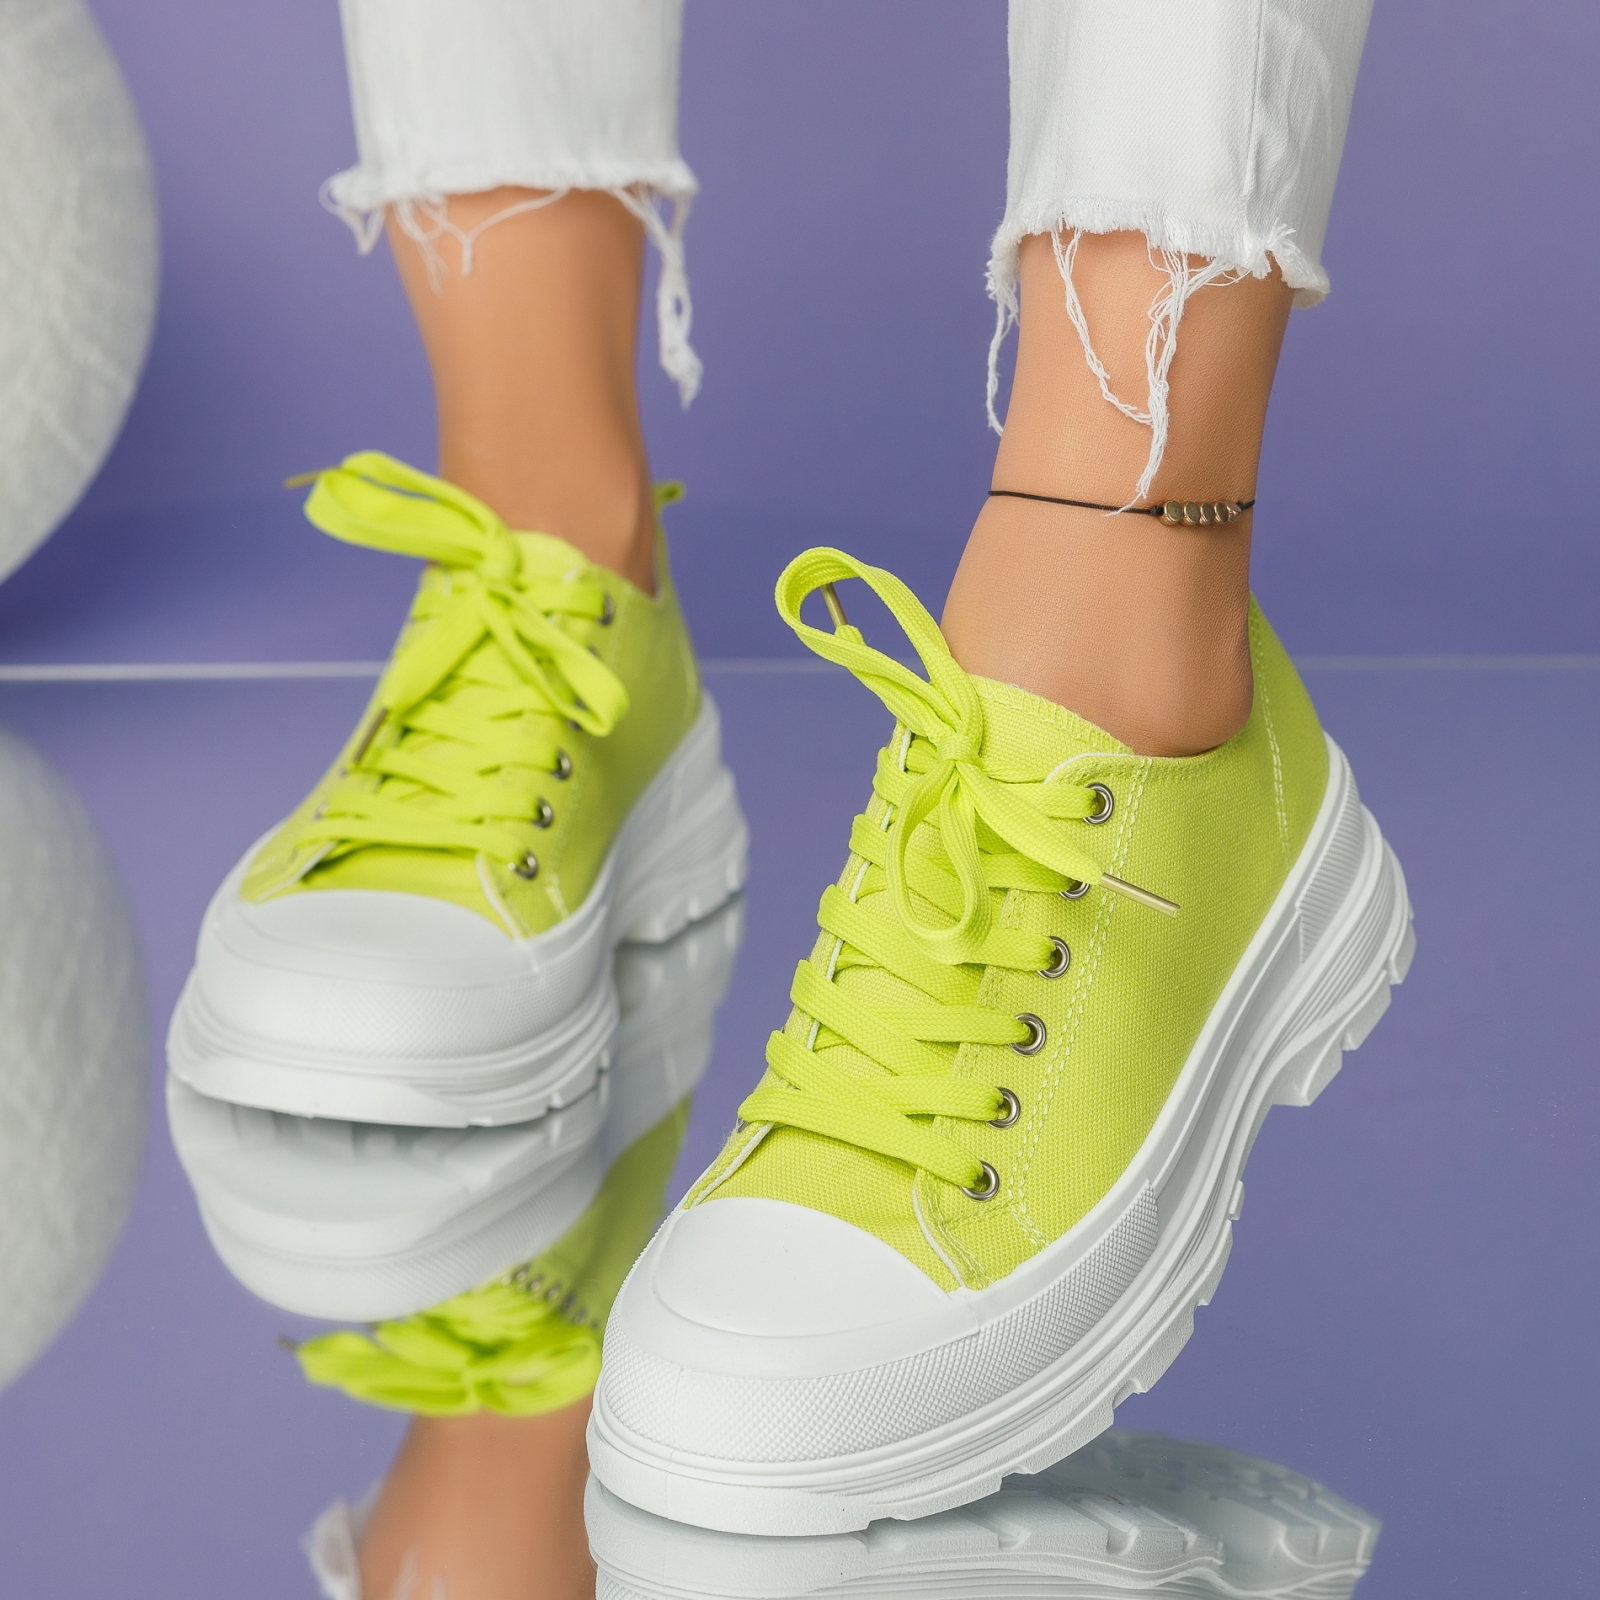 Дамски спортни обувки Pearl4 Neon #4226M